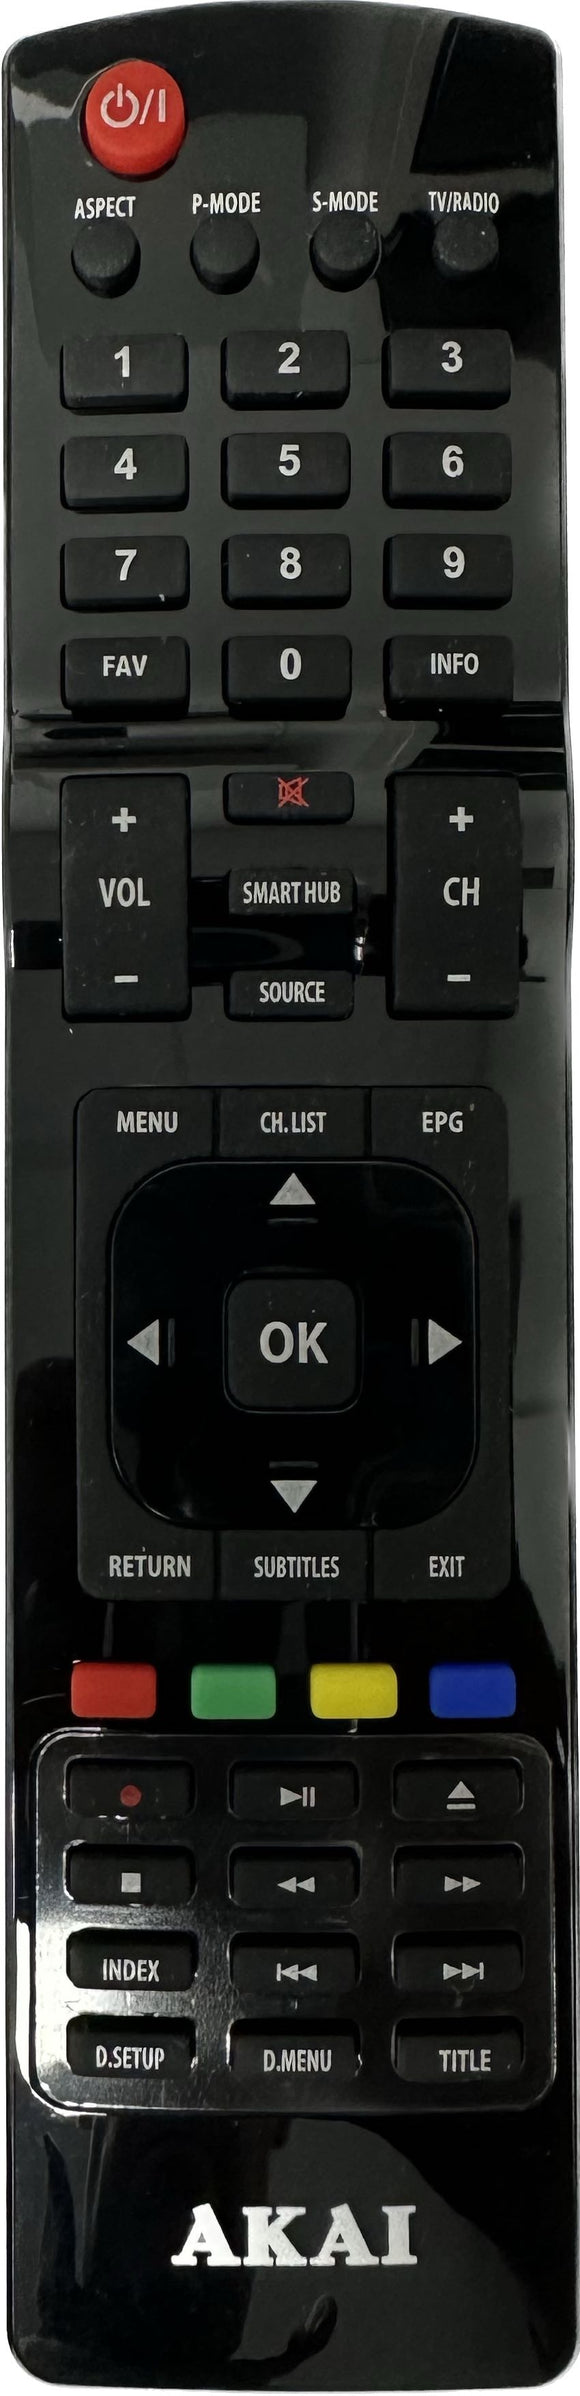 AKAI AK3215HDC LED TV Original Remote Control Genuine